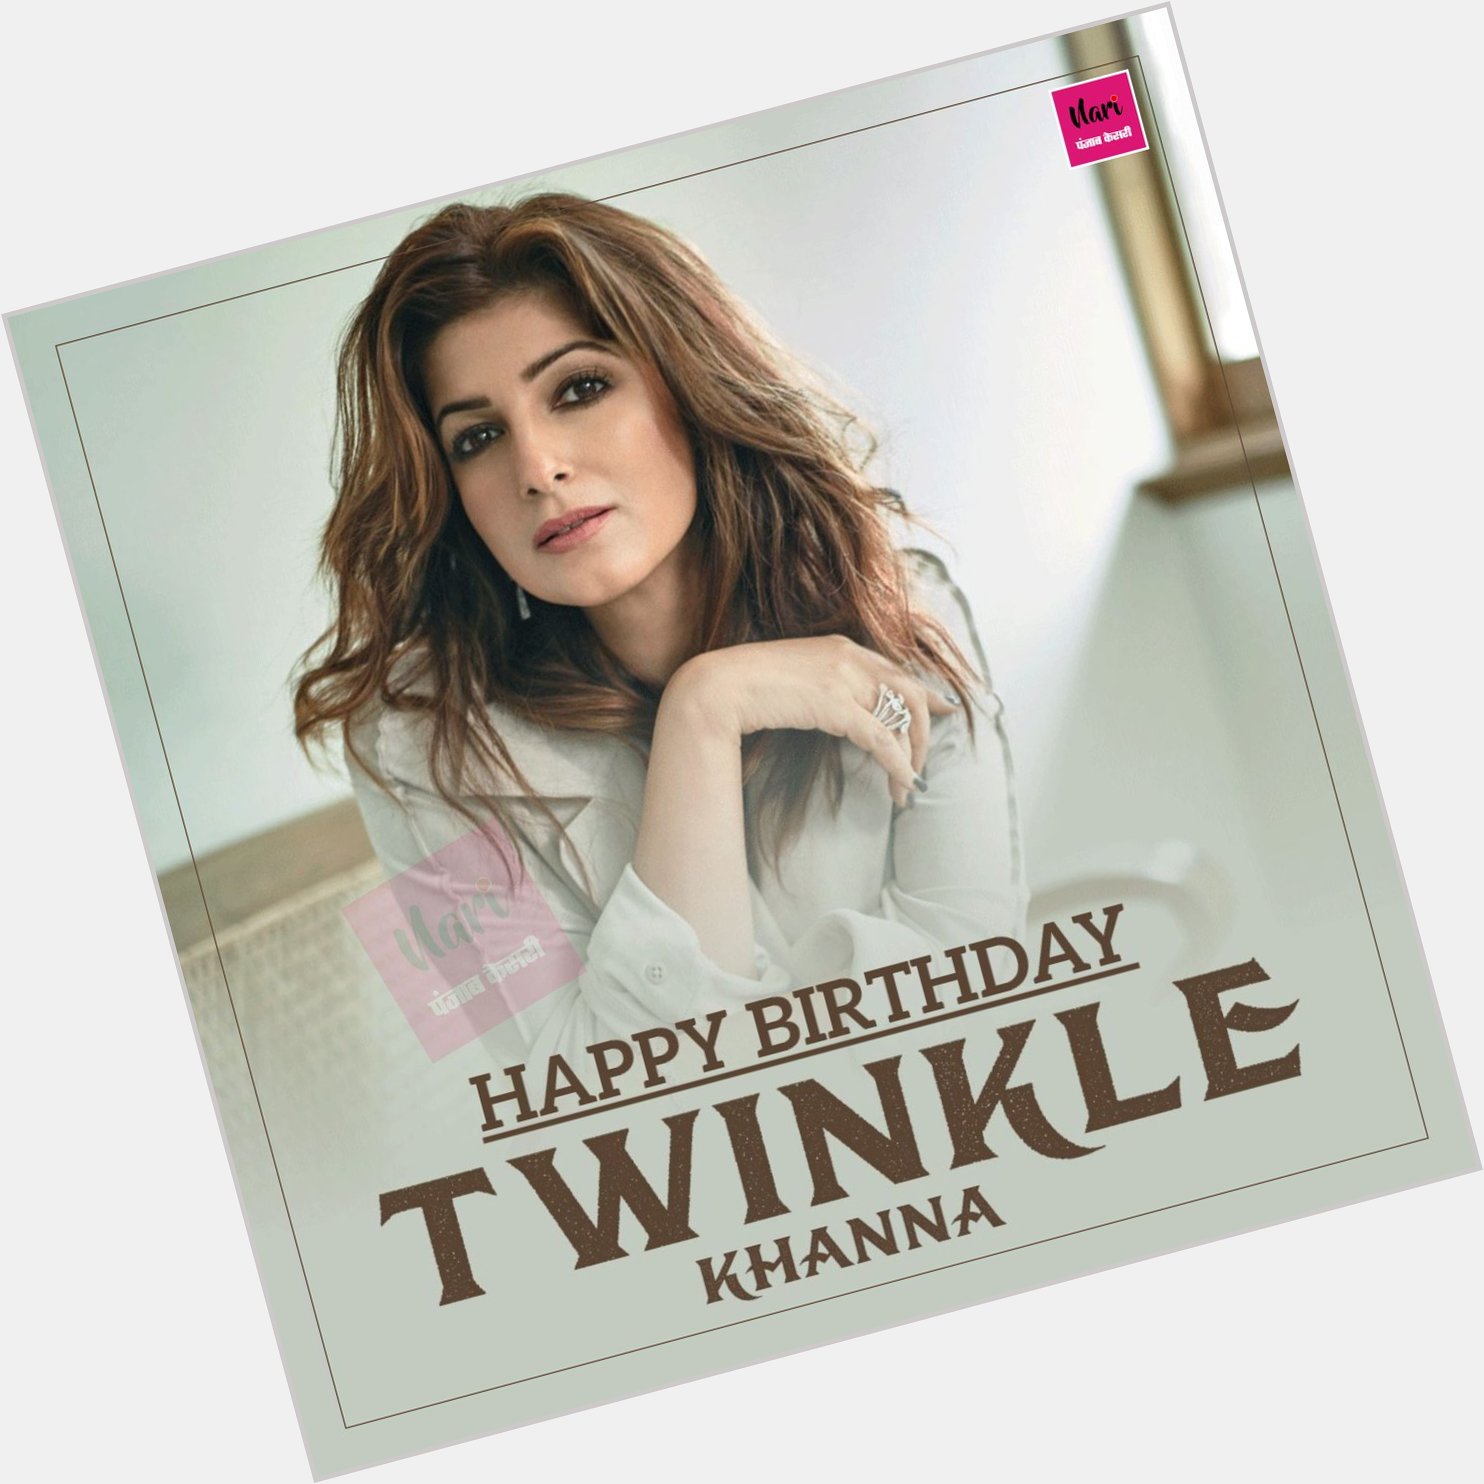 Happy Birthday Twinkle Khanna     